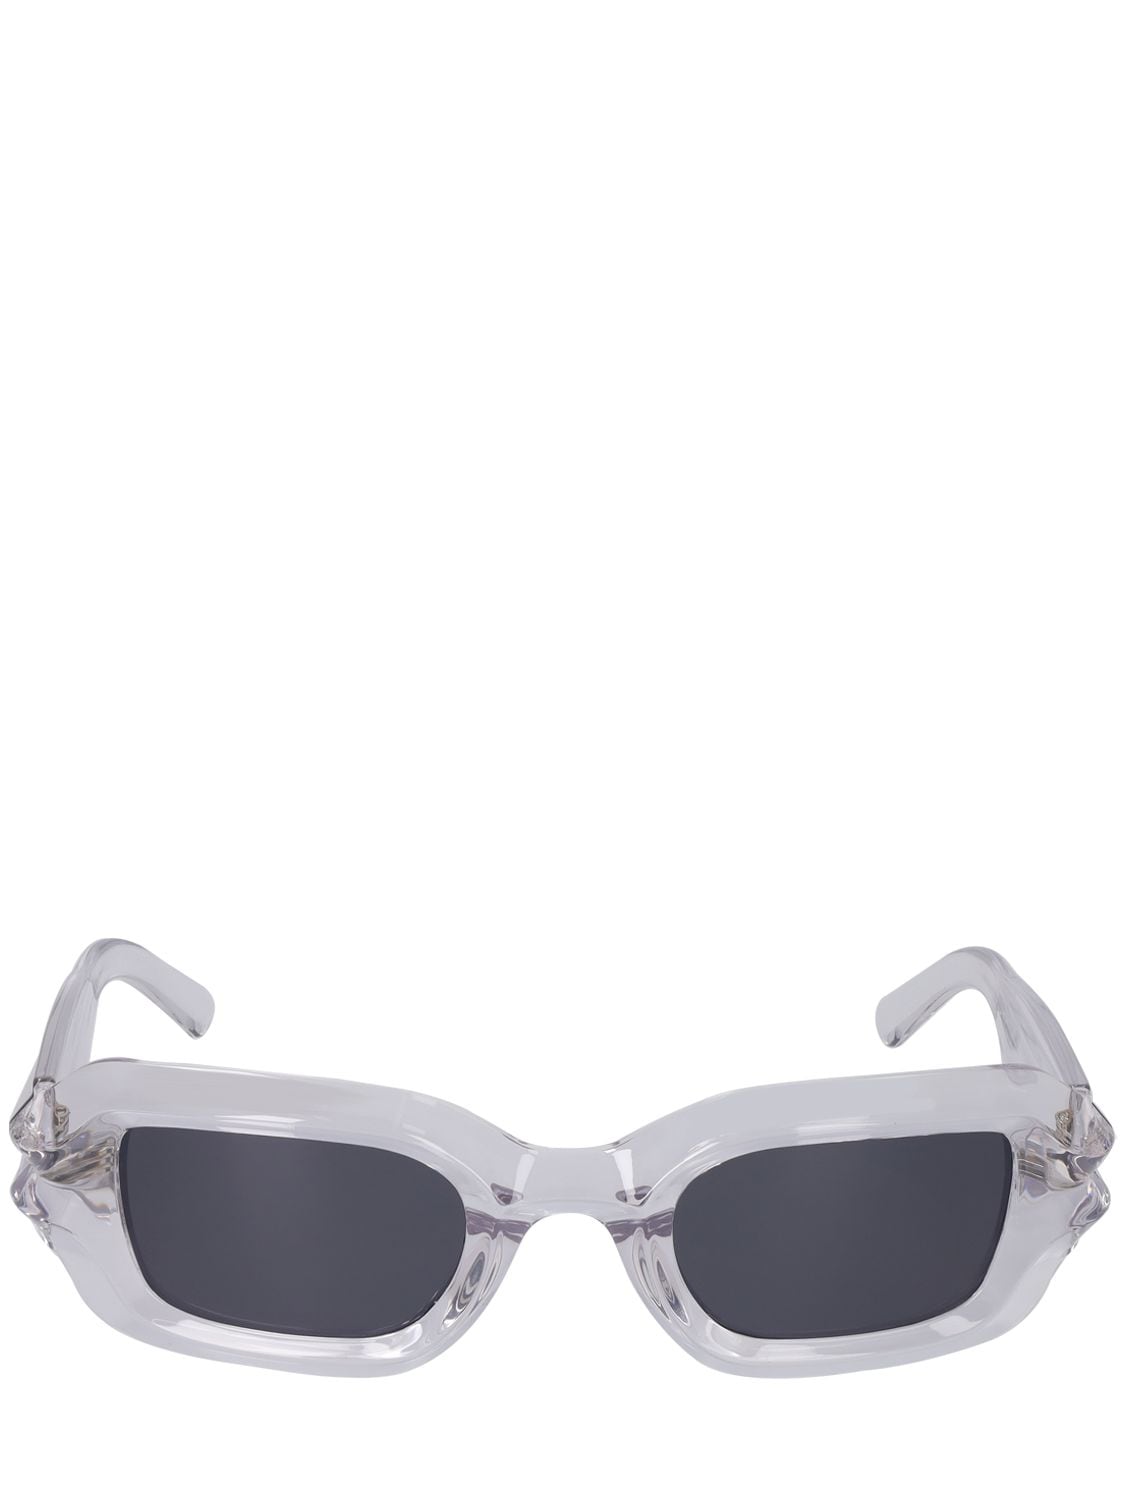 Image of Bolu Glacial Squared Sunglasses